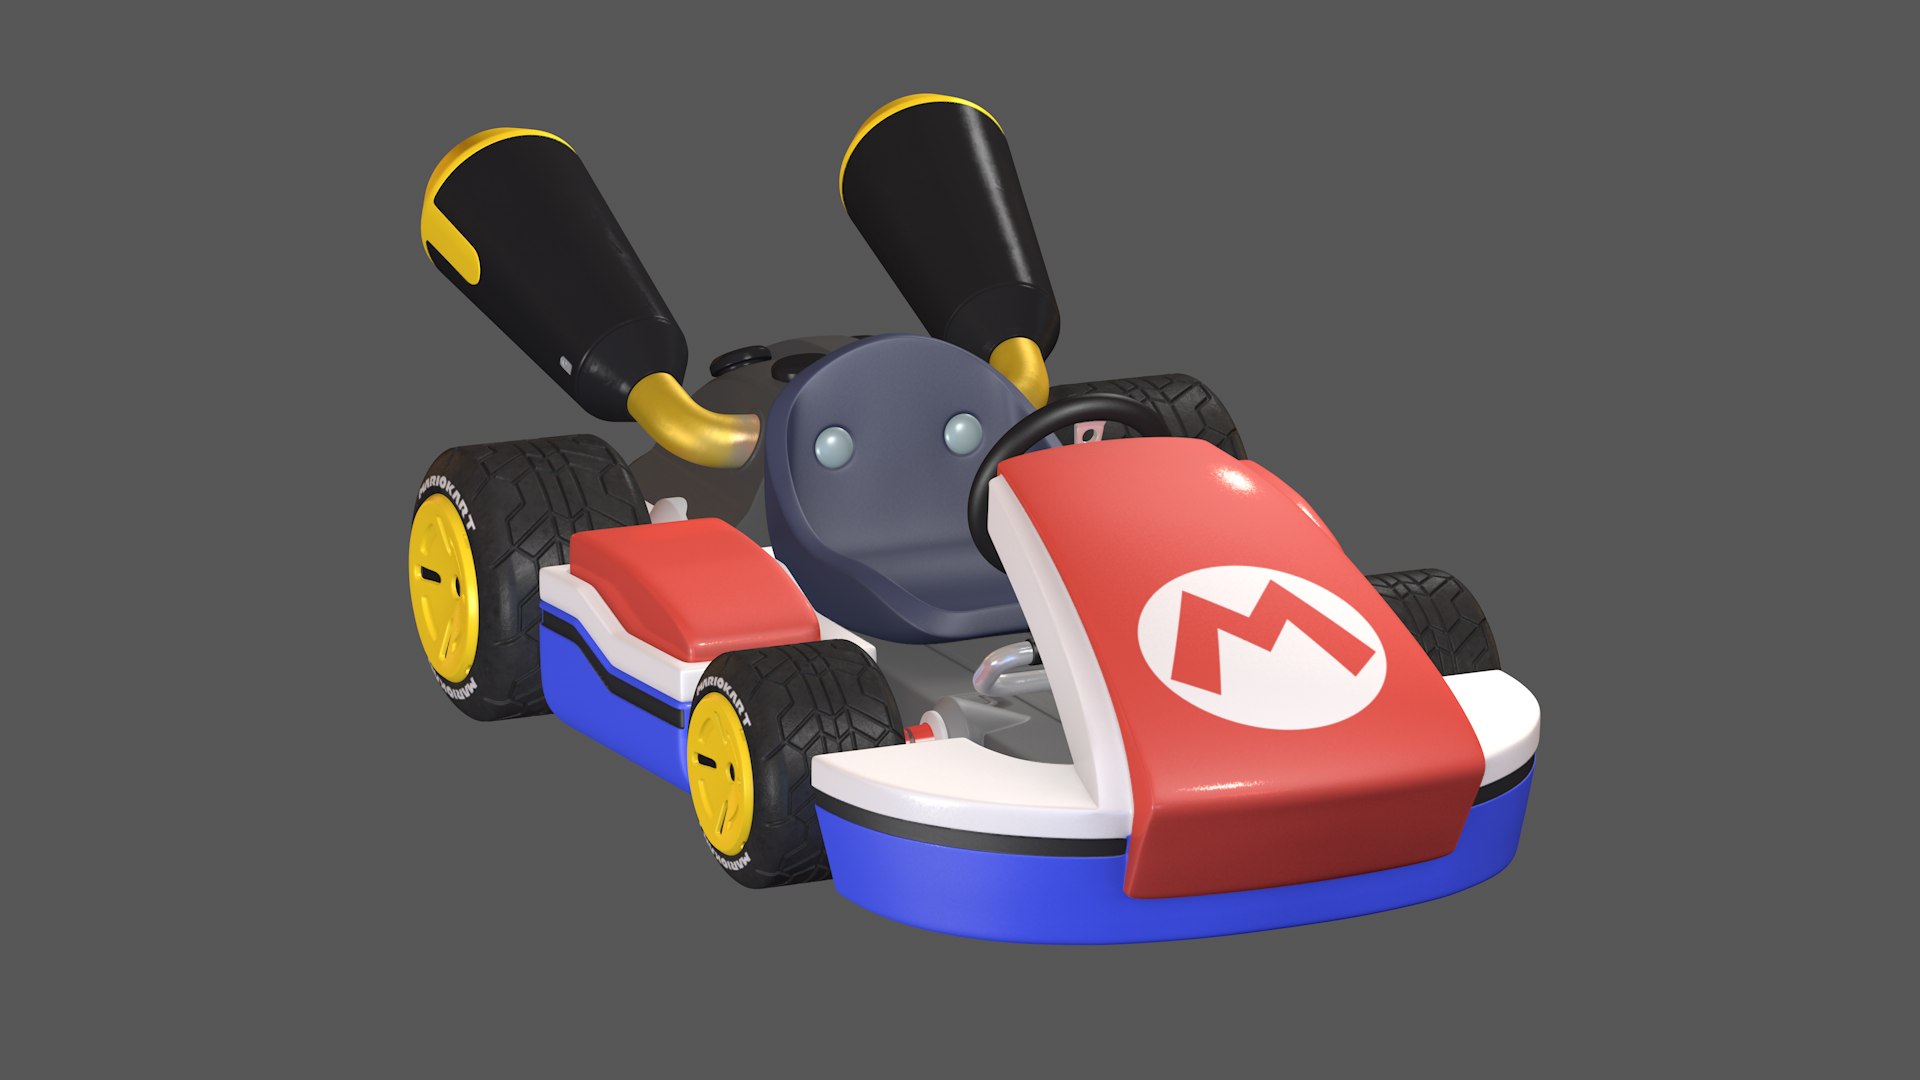 Kart Super Mario 3d Model Turbosquid 1627633 5686